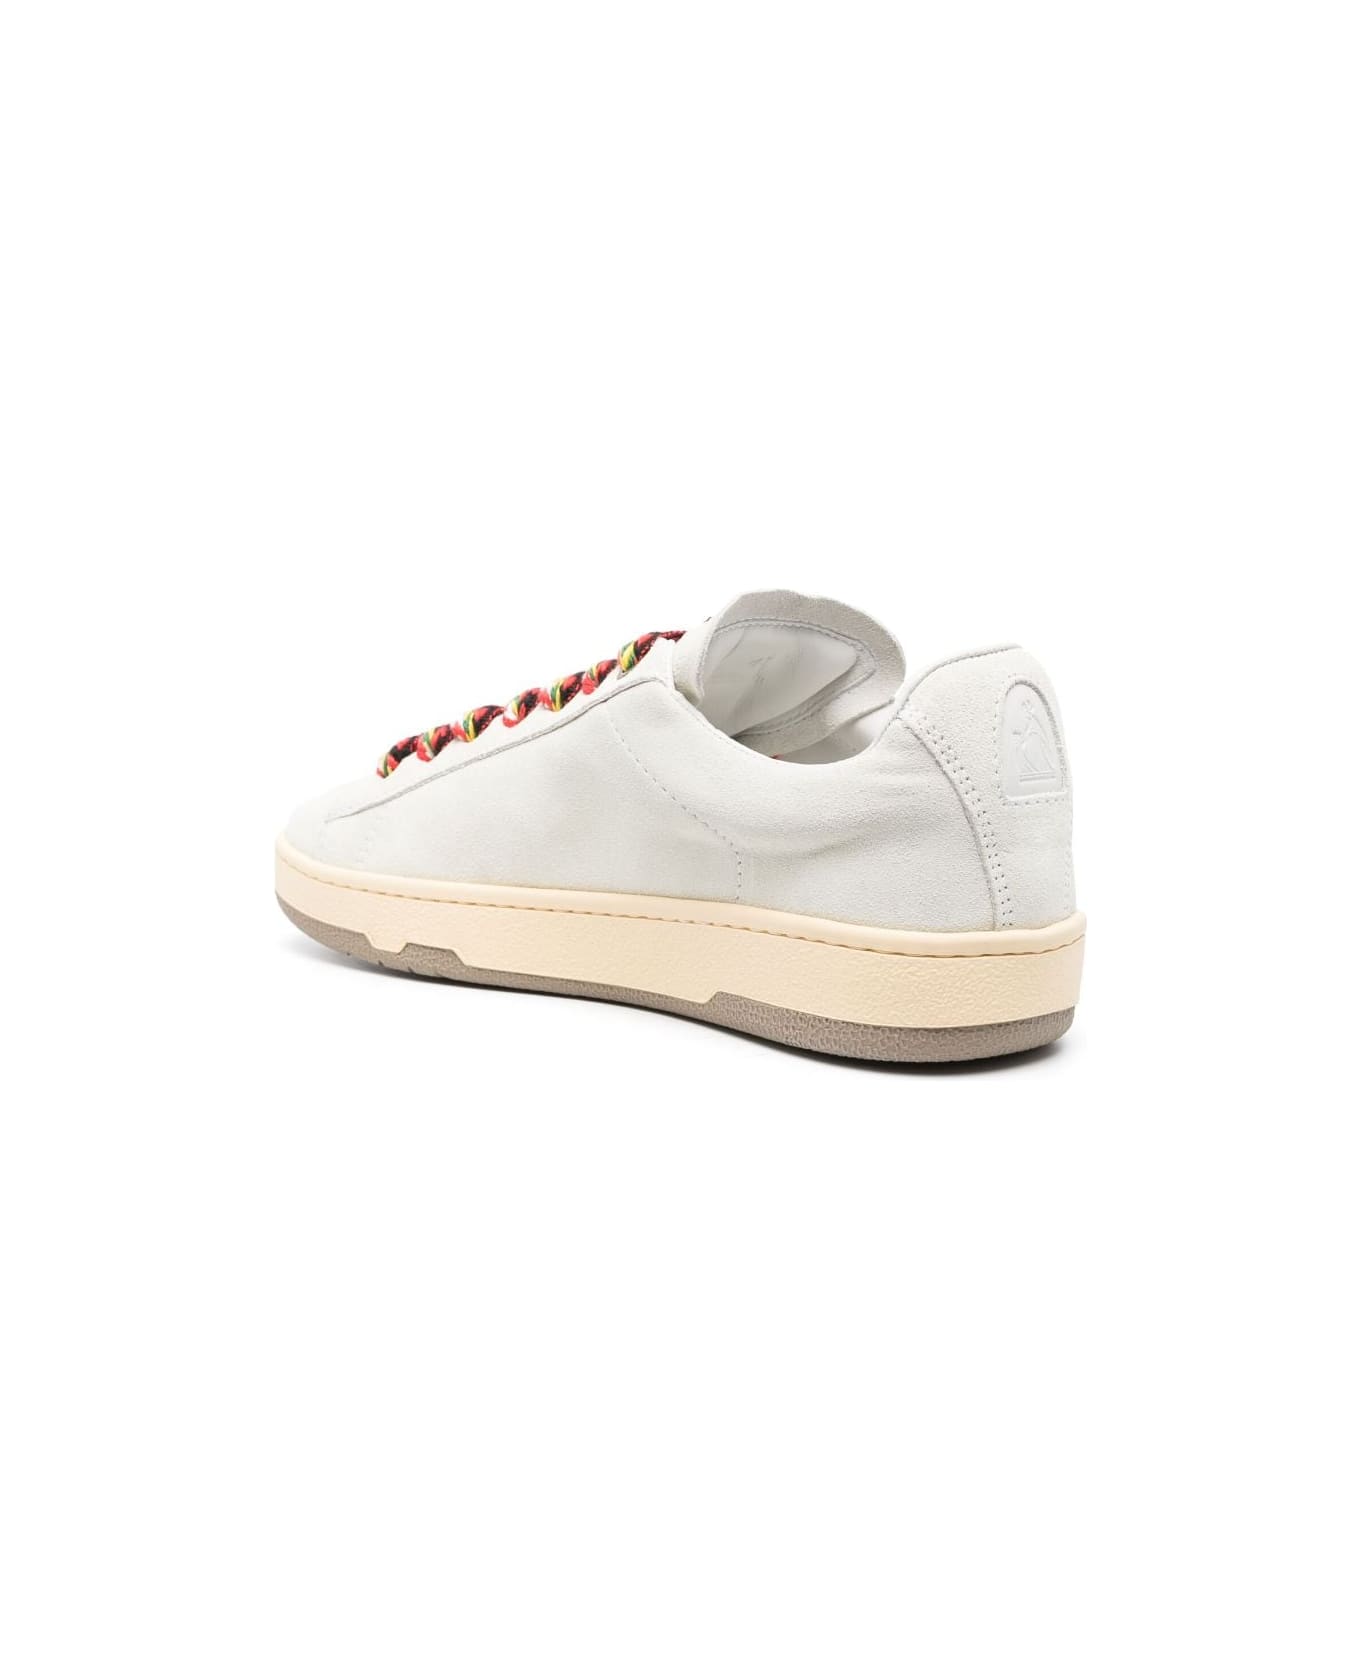 Lanvin Lite Curb Low Top Sneakers - White